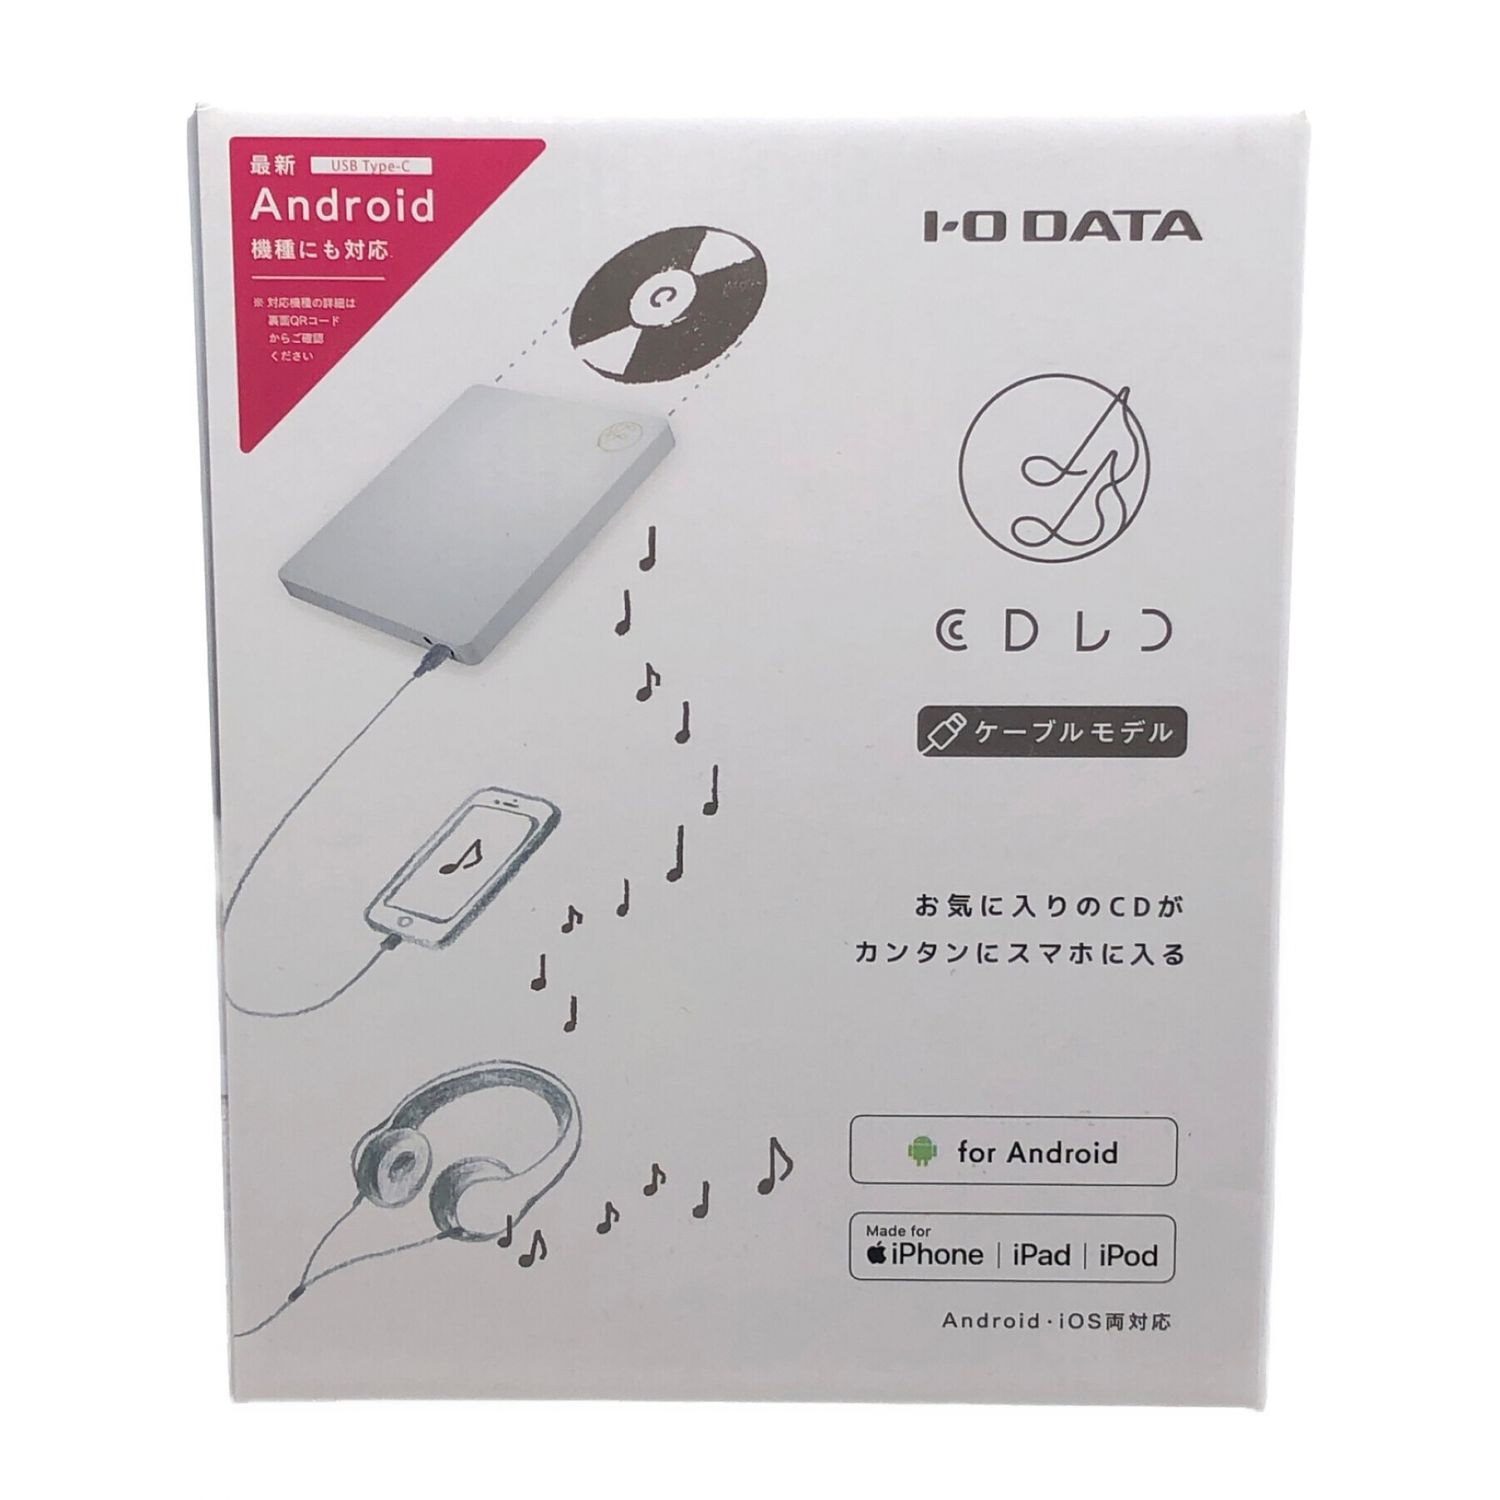 CDレコI・O DATA アイ・オー・データ モデル スマートフォン用CD 